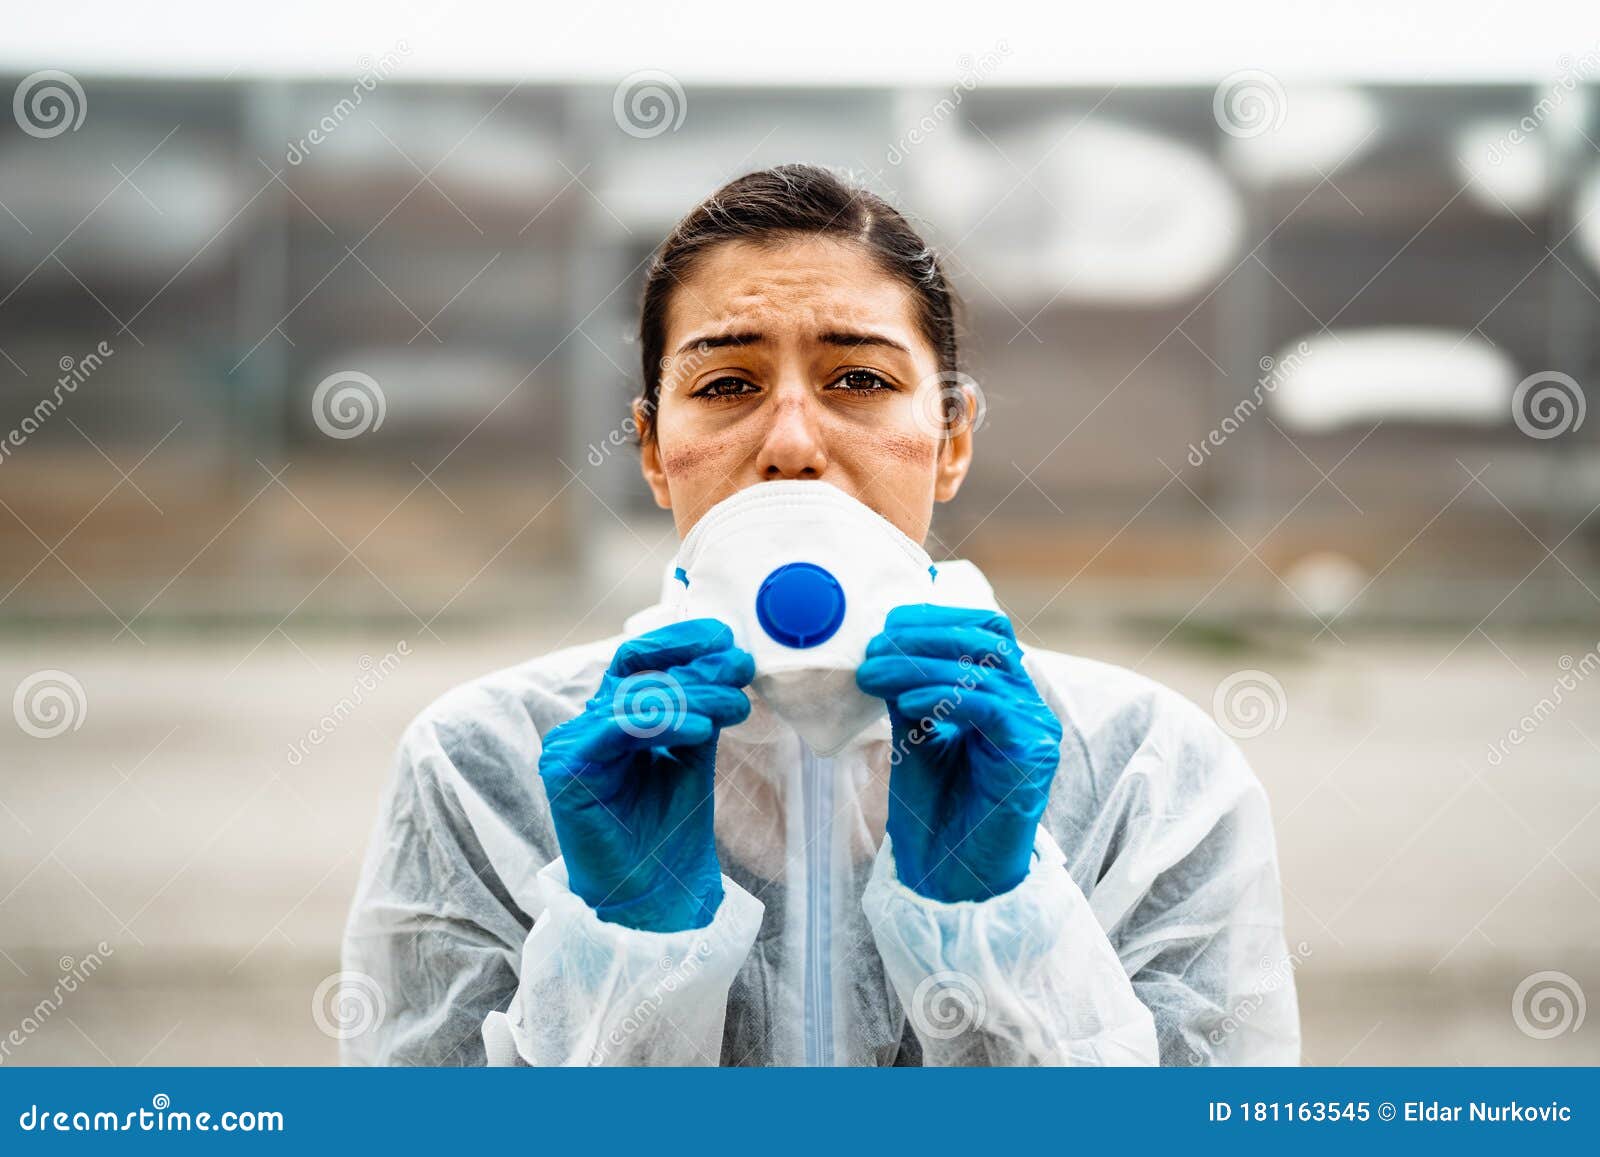 exhausted emotional doctor/nurse wearing coronavirus protective gear n95 mask.coronavirus covid-19 pandemic outbreak.frontline